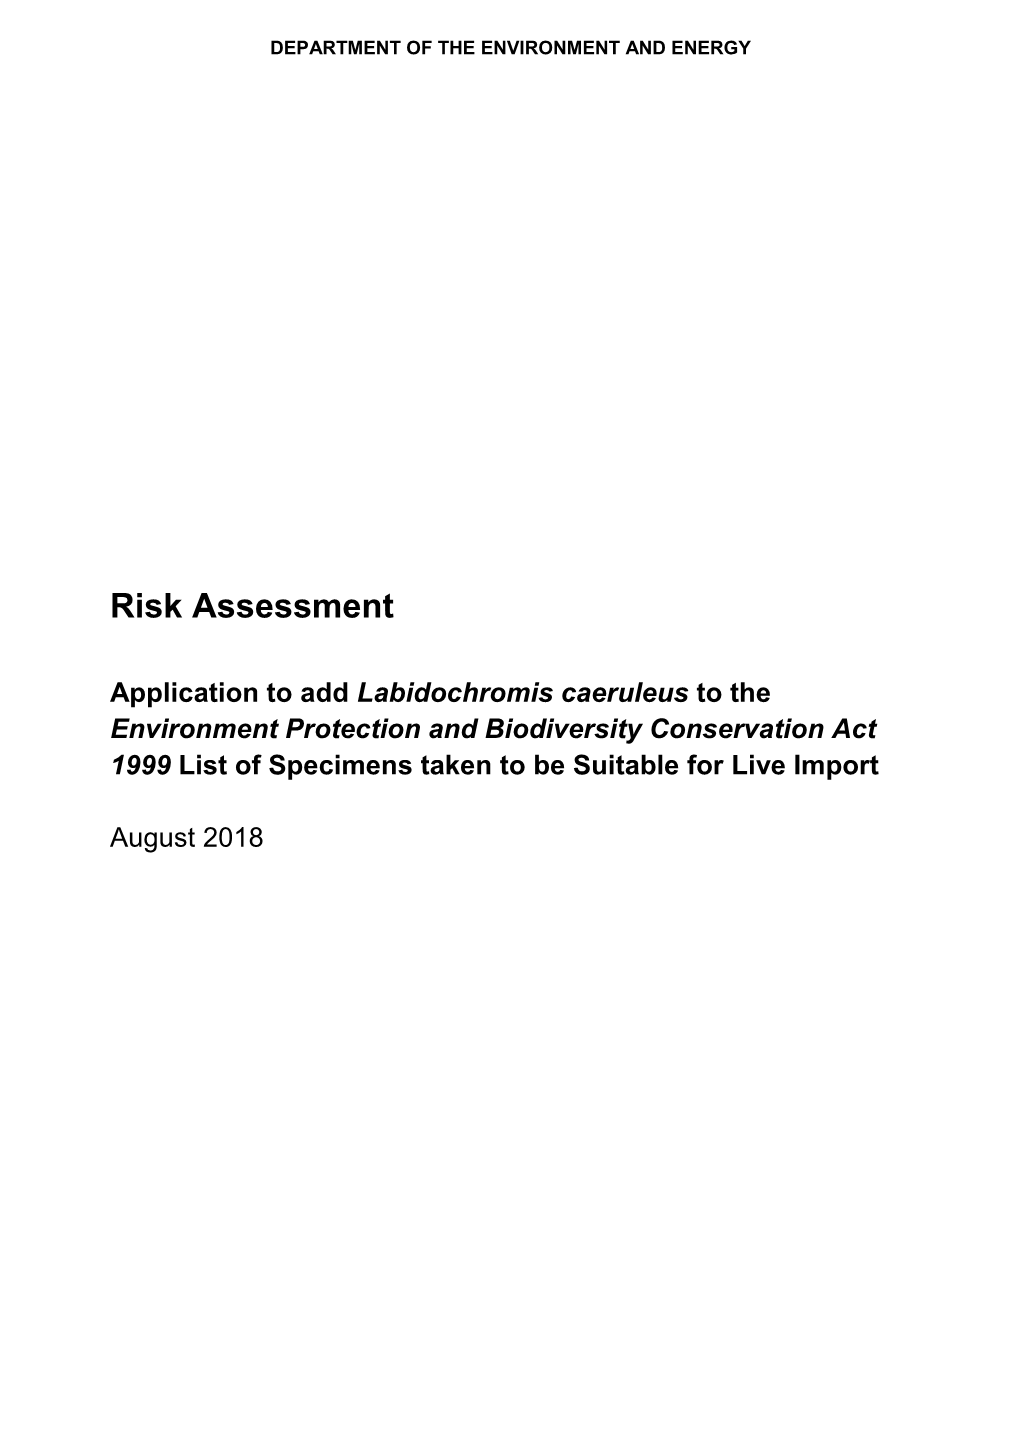 Risk Assessment Application to Add Labidochromis Caeruleus to The